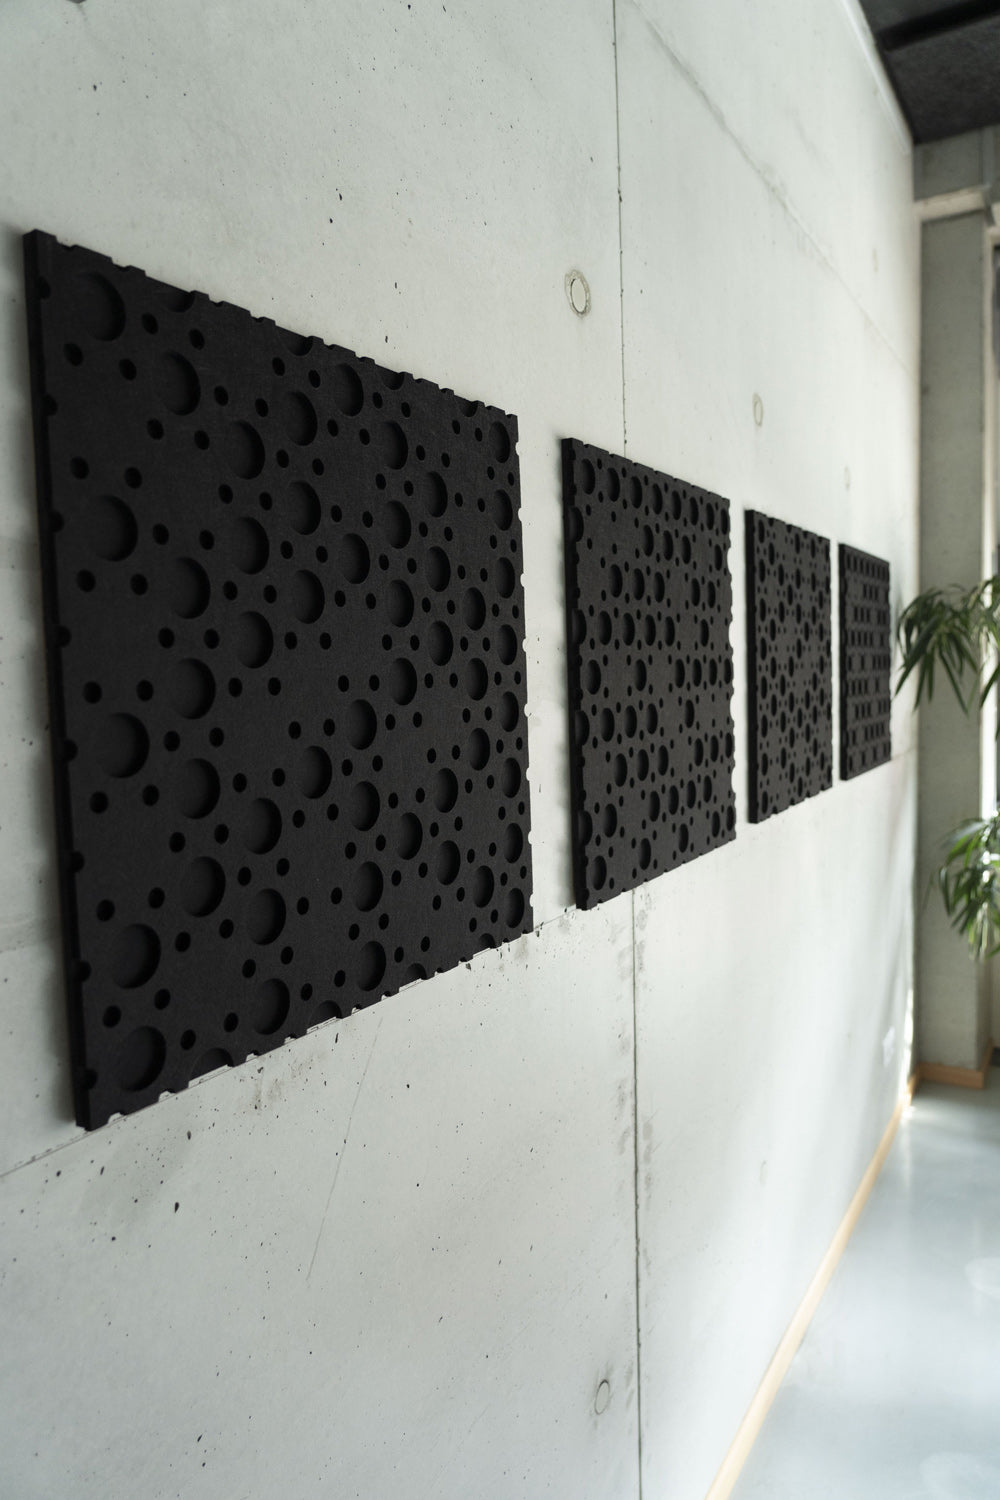 Selbstklebende Akustikfilzplattenkreise Schwarz 18 mm